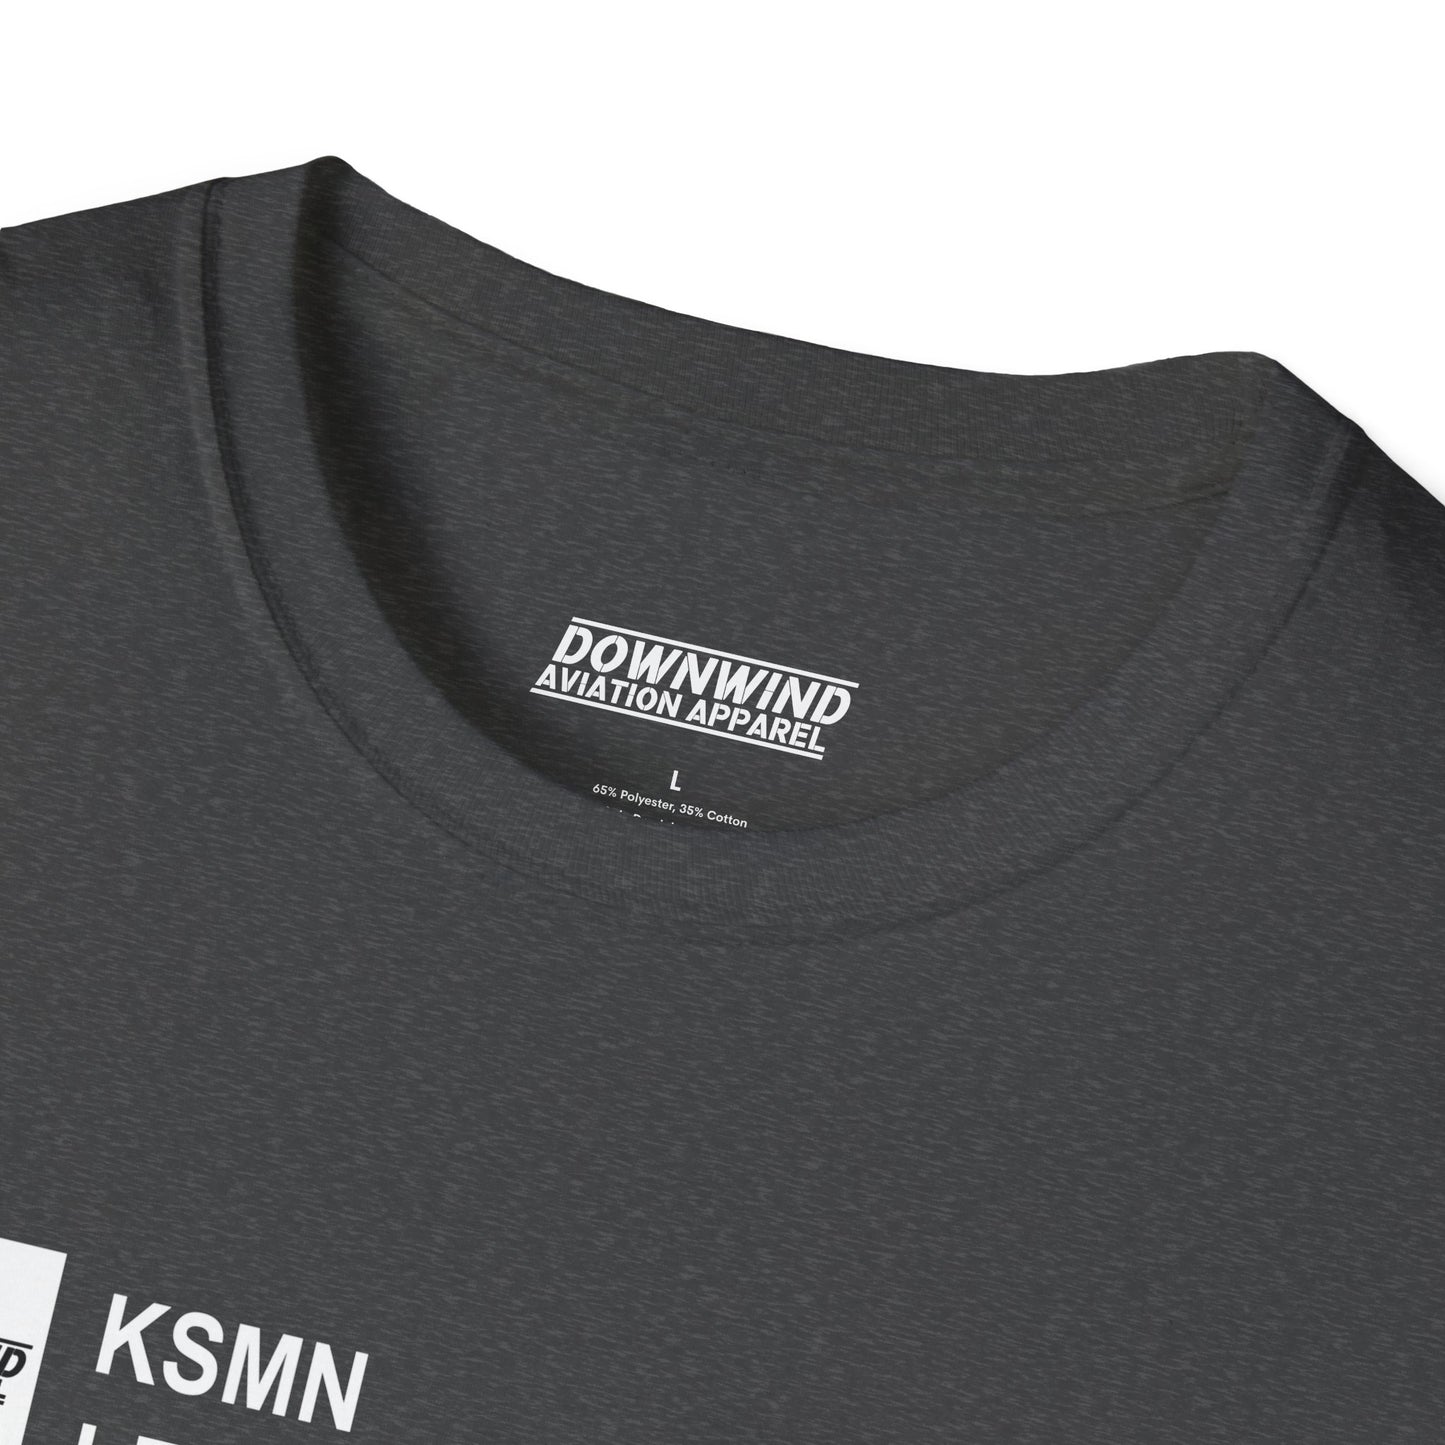 KSMN / Lemhi County Airport T-Shirt